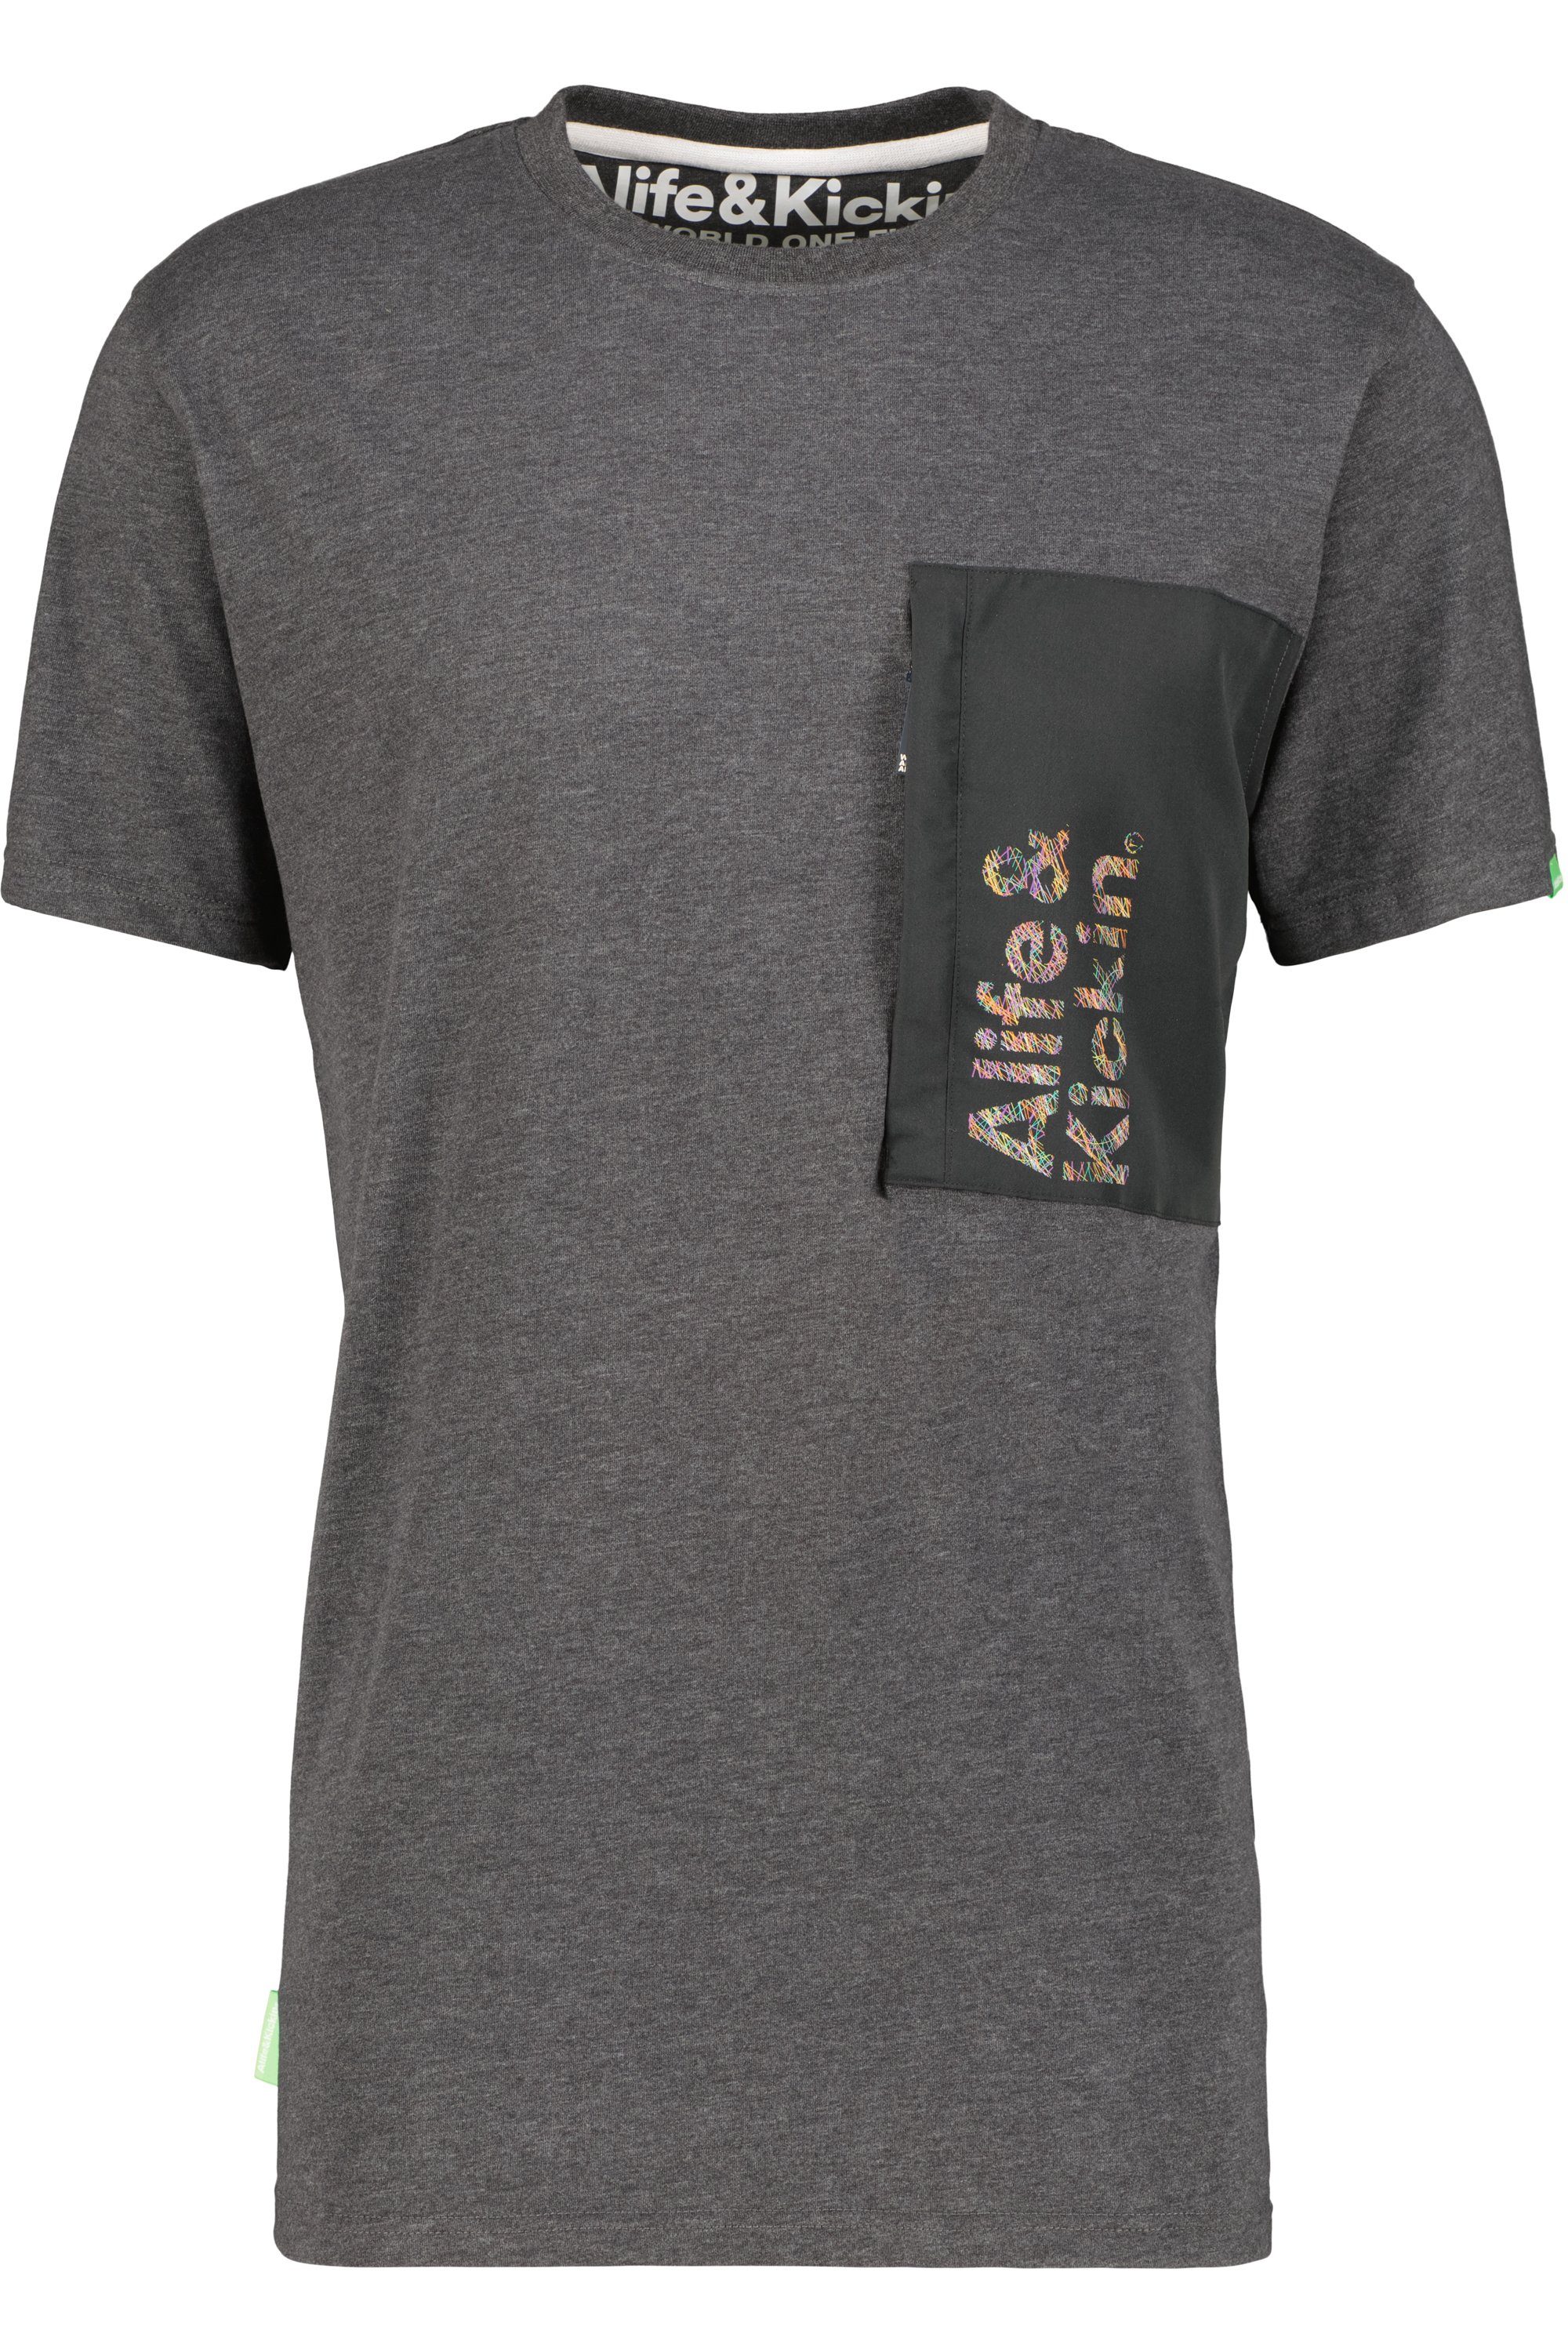 Alife & moonless RossAK Herren T-Shirt Shirt Kickin T-Shirt